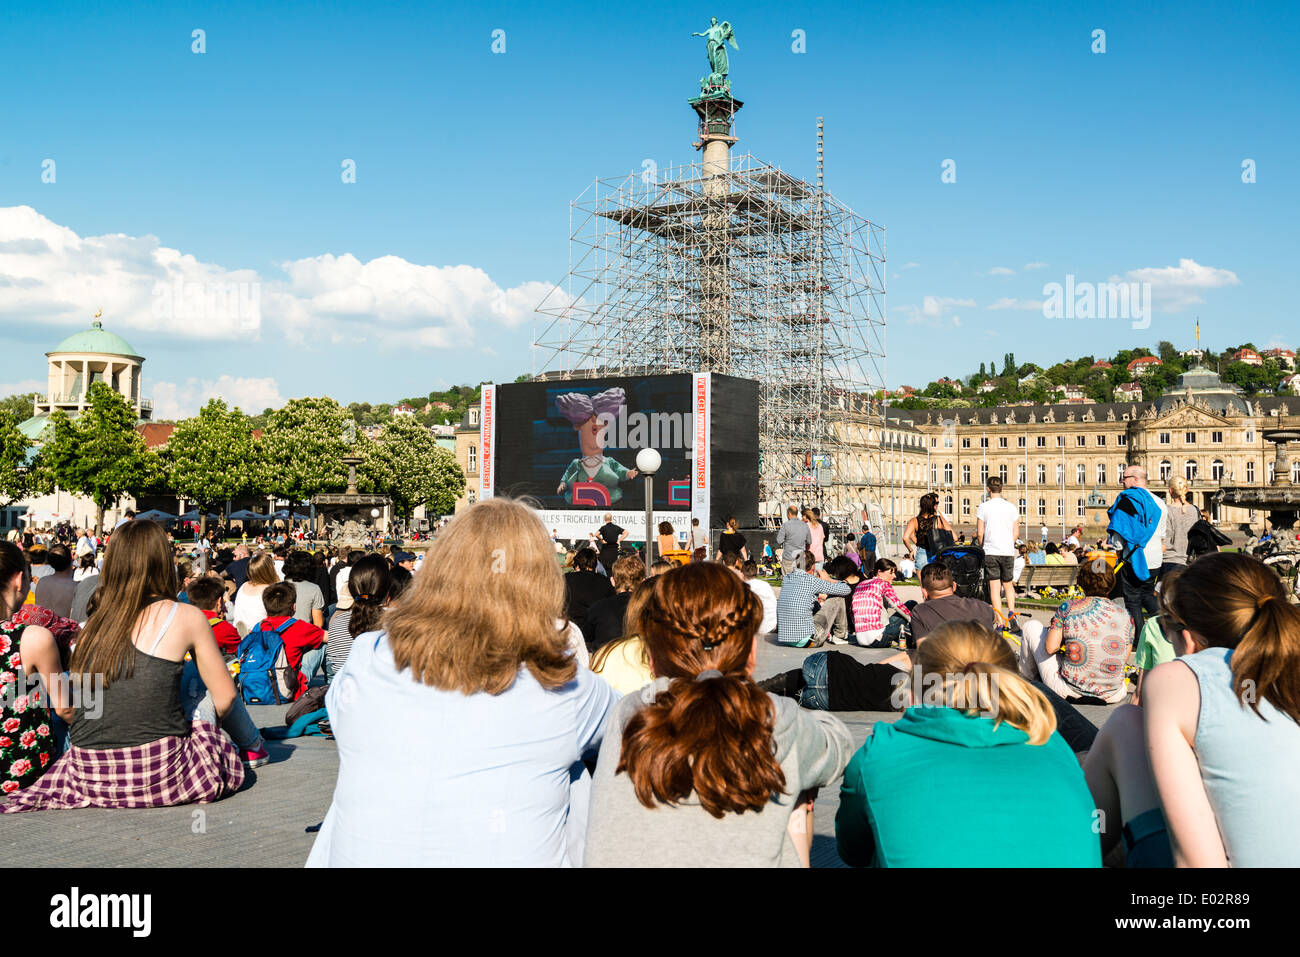 People enjoying open air cinema in the city center of Stuttgart (Germany) Stock Photo